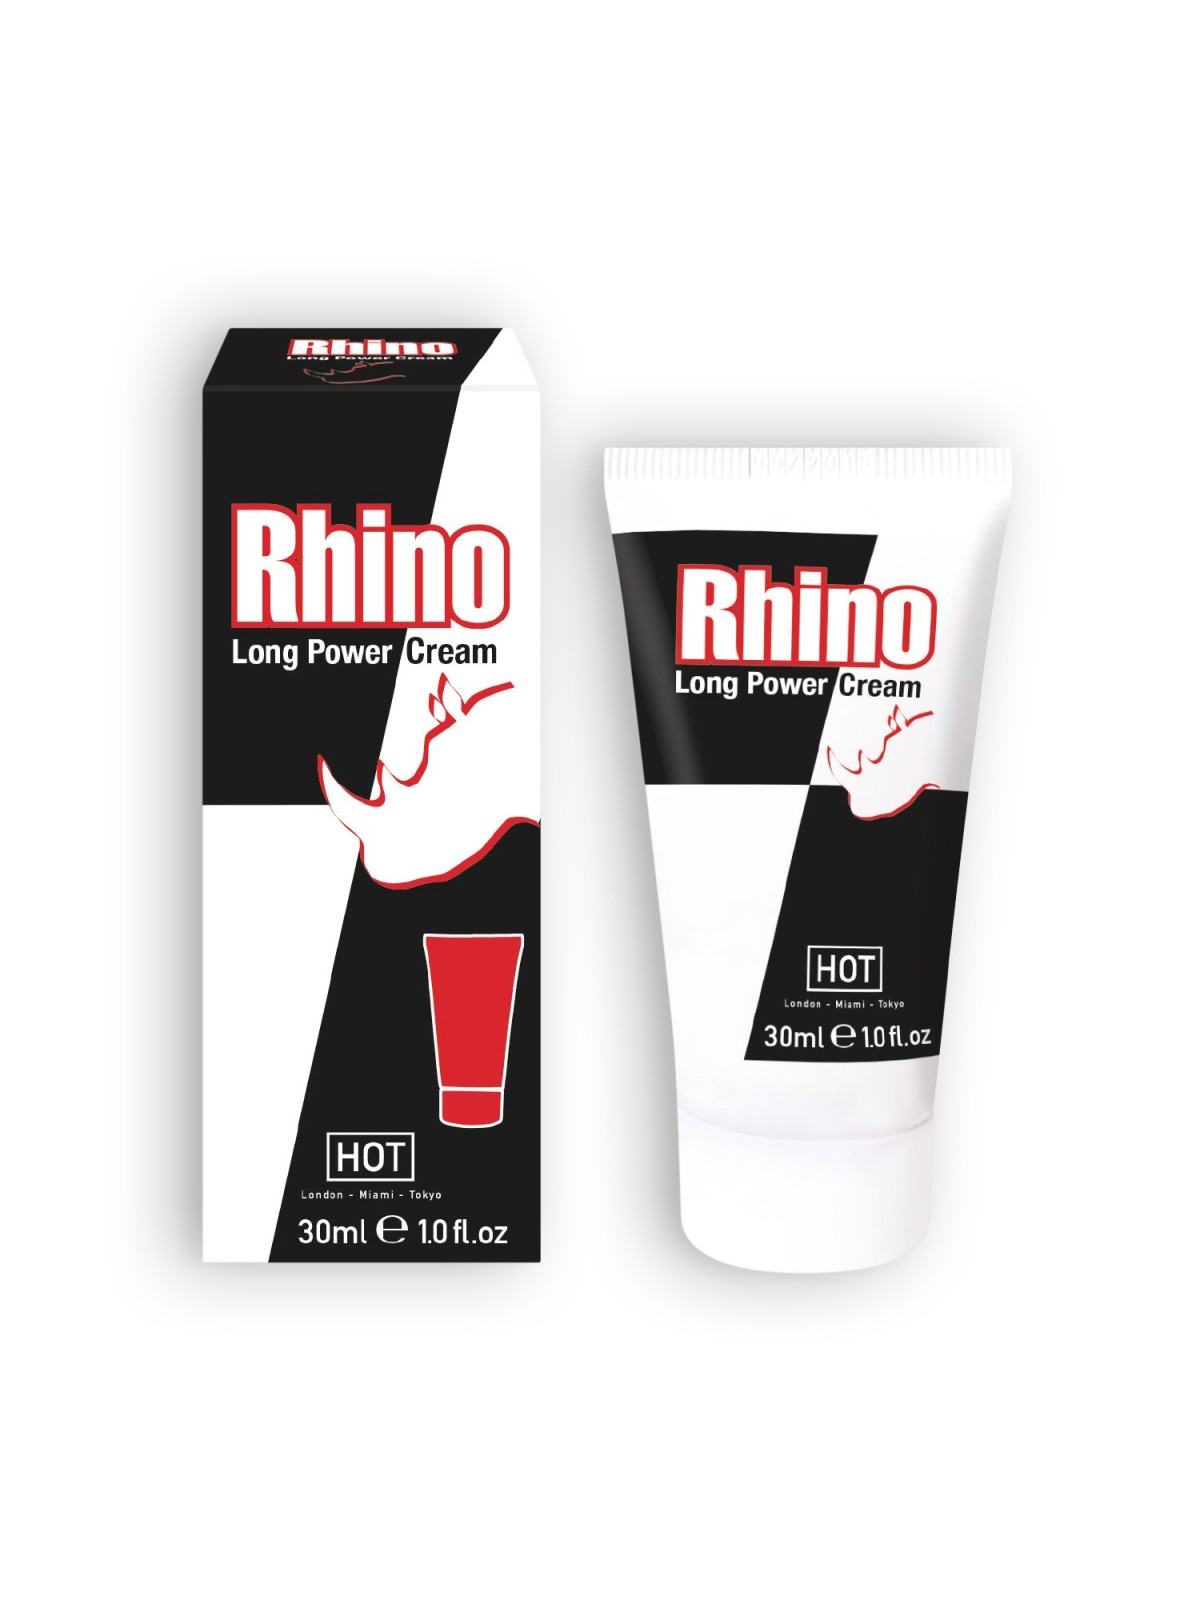 rhino-long-power-cream-hottm-30ml-drugstore-hottm.jpg